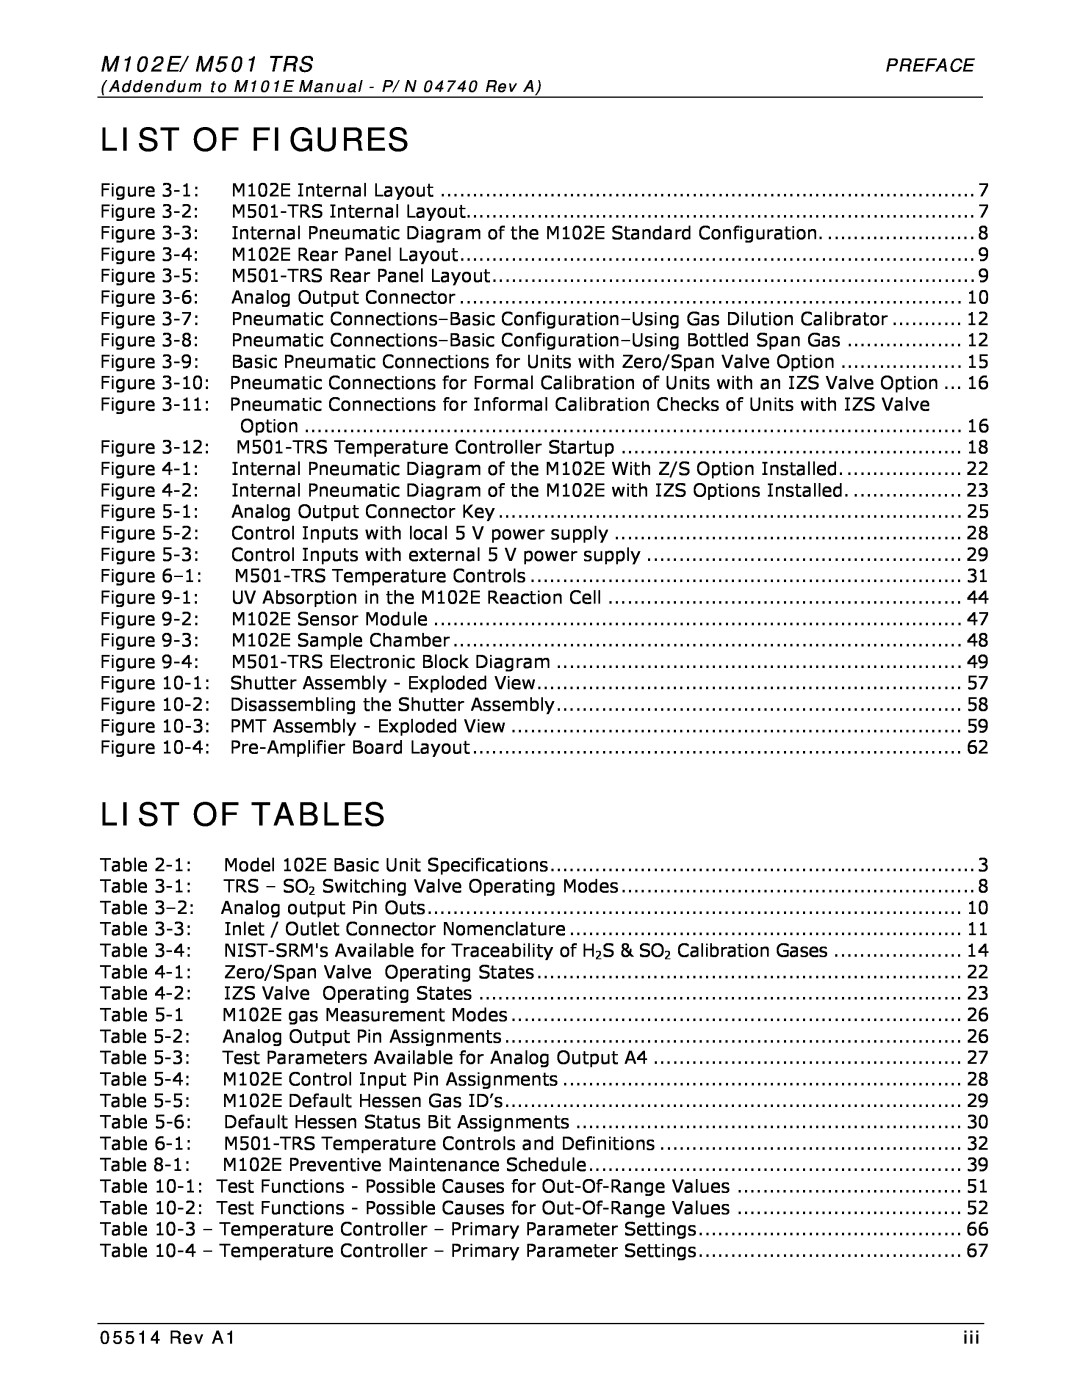 Teledyne manual List Of Figures, List Of Tables, M102E/M501 TRS, Preface, Rev A1 